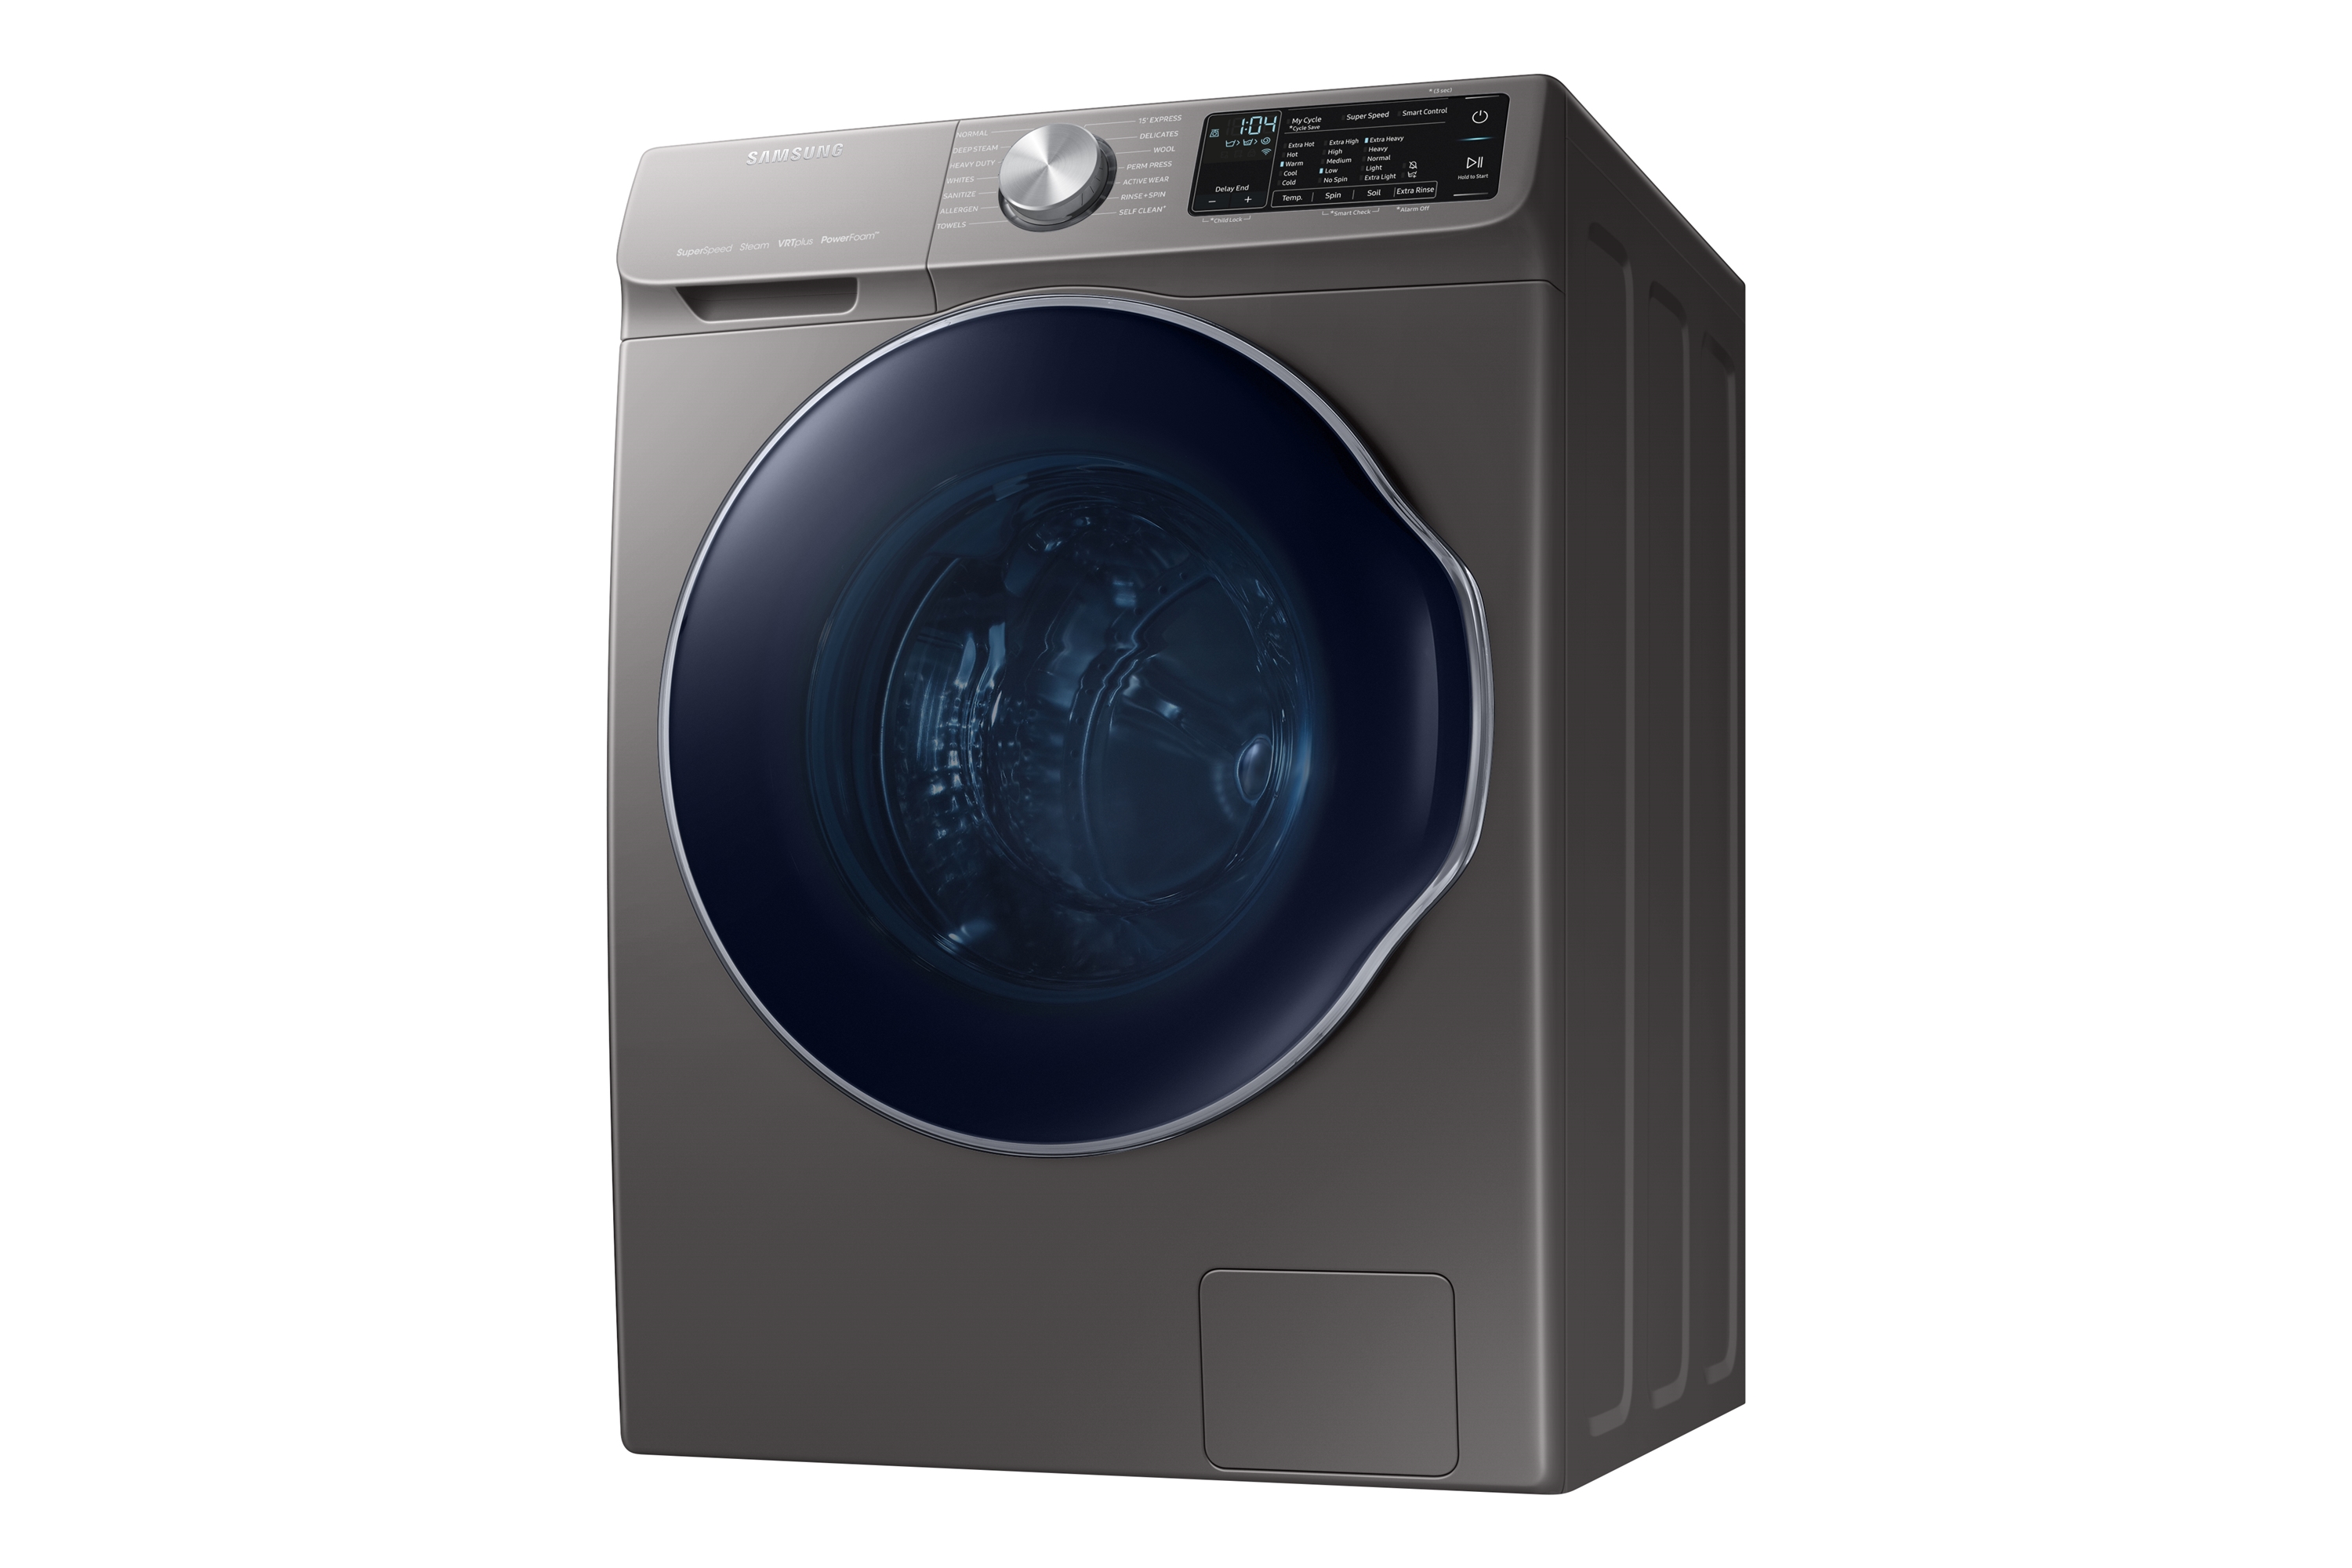 Samsung integrated washing machine